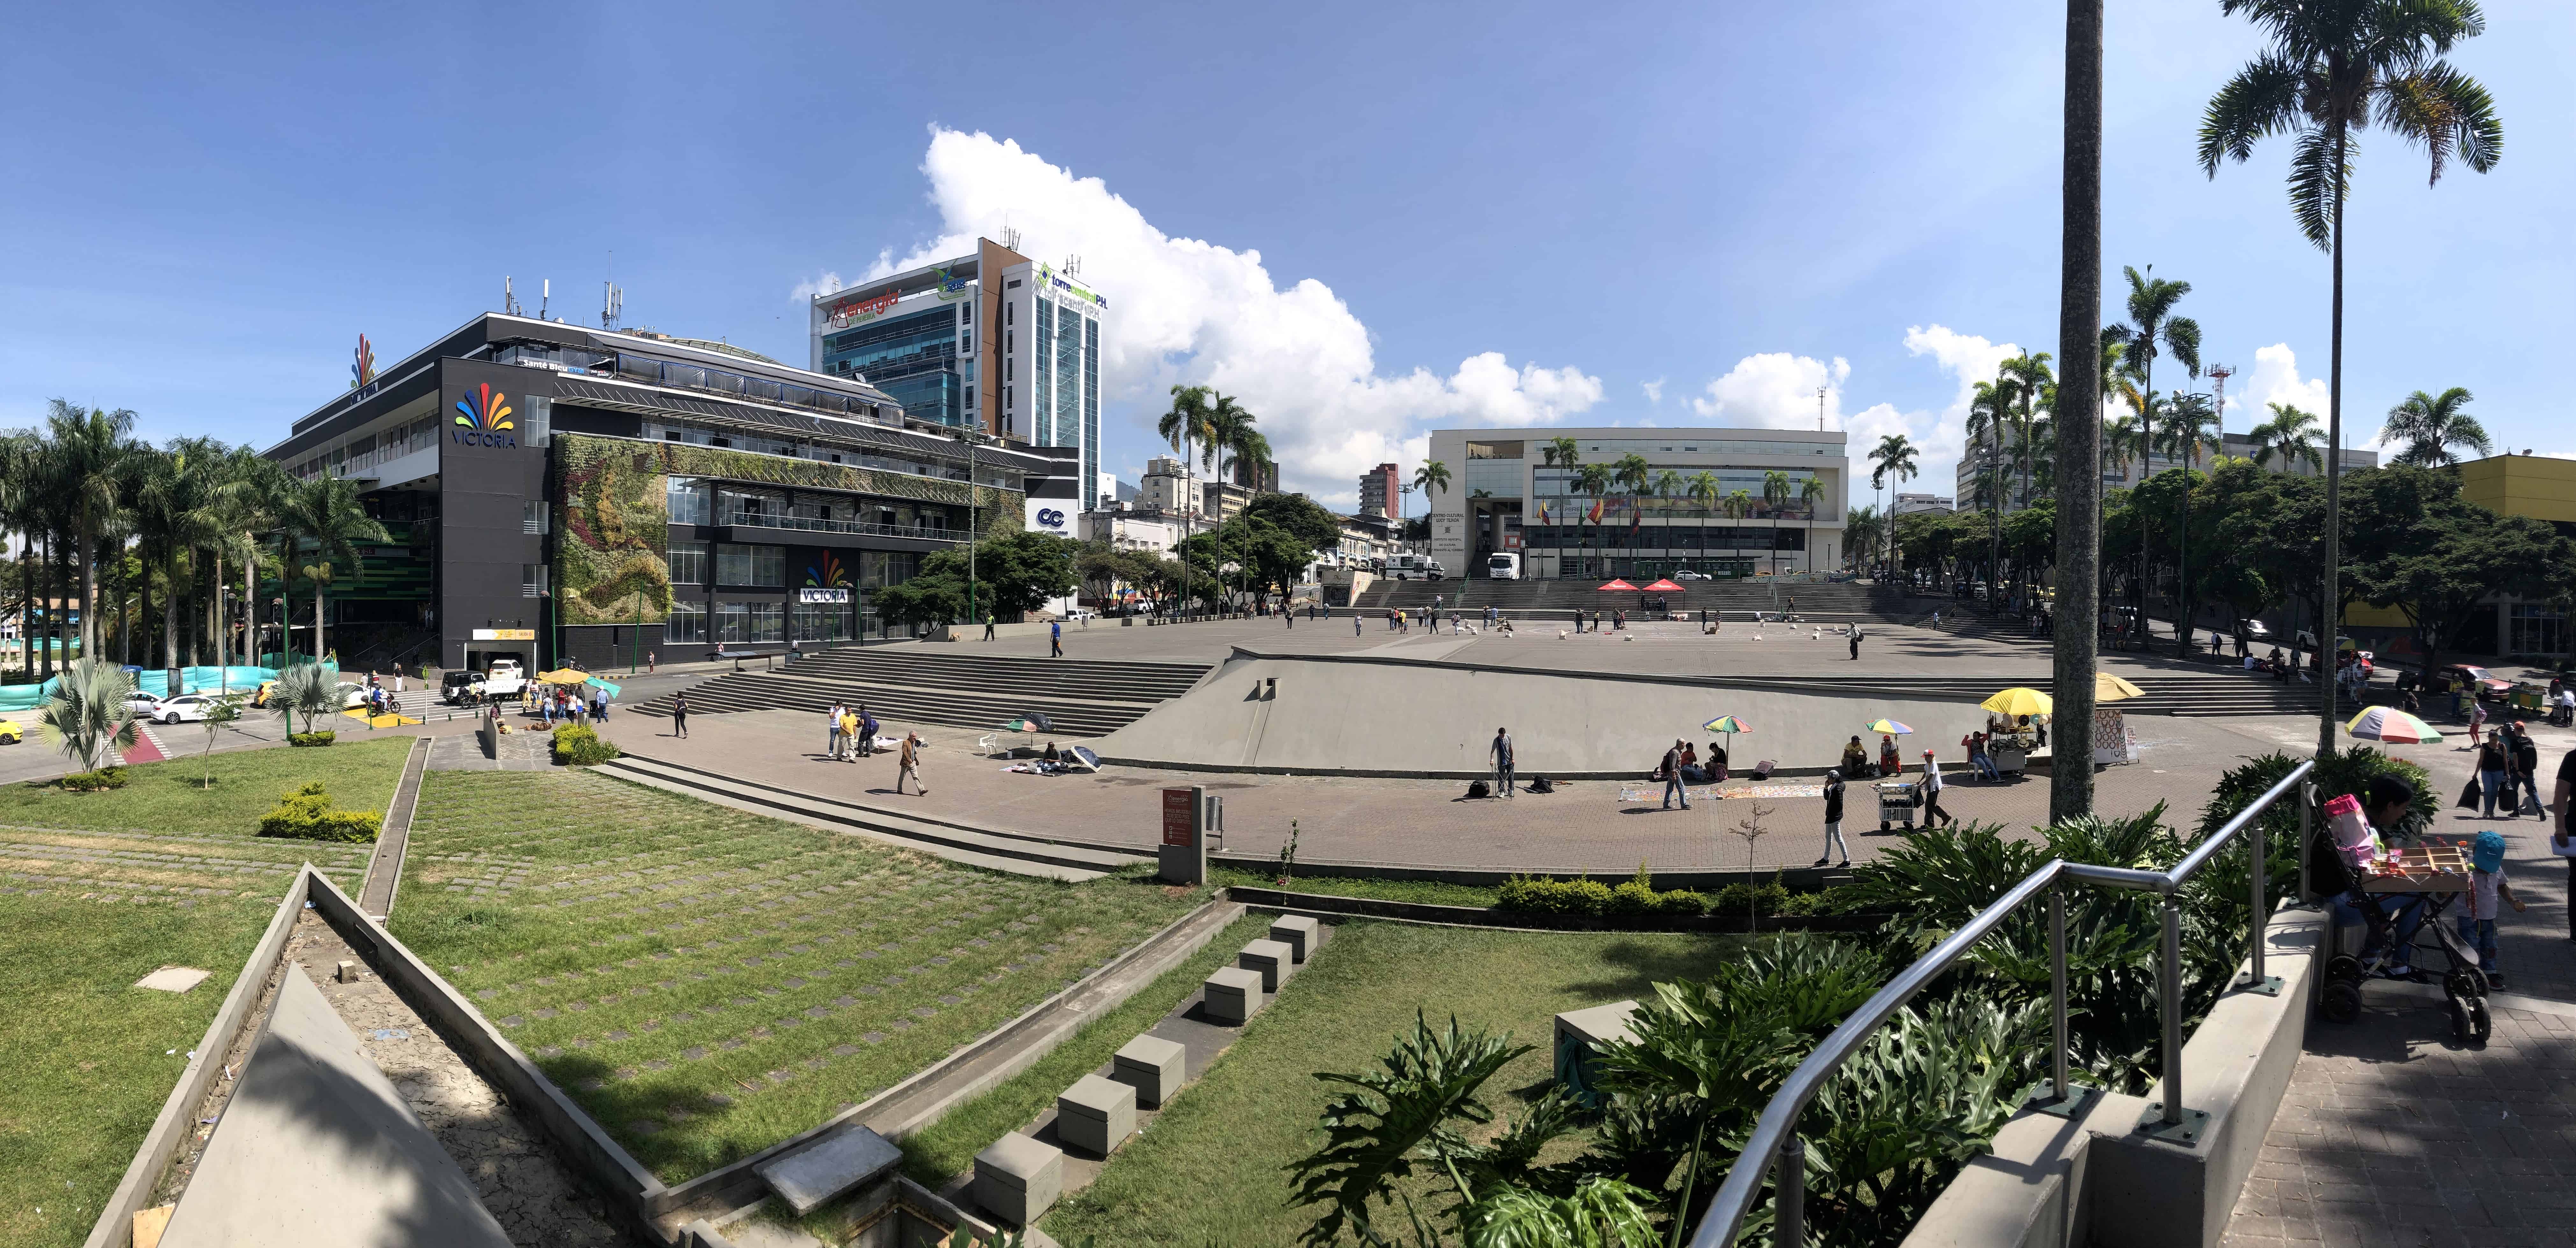 Panoramic view of Plaza Victoria